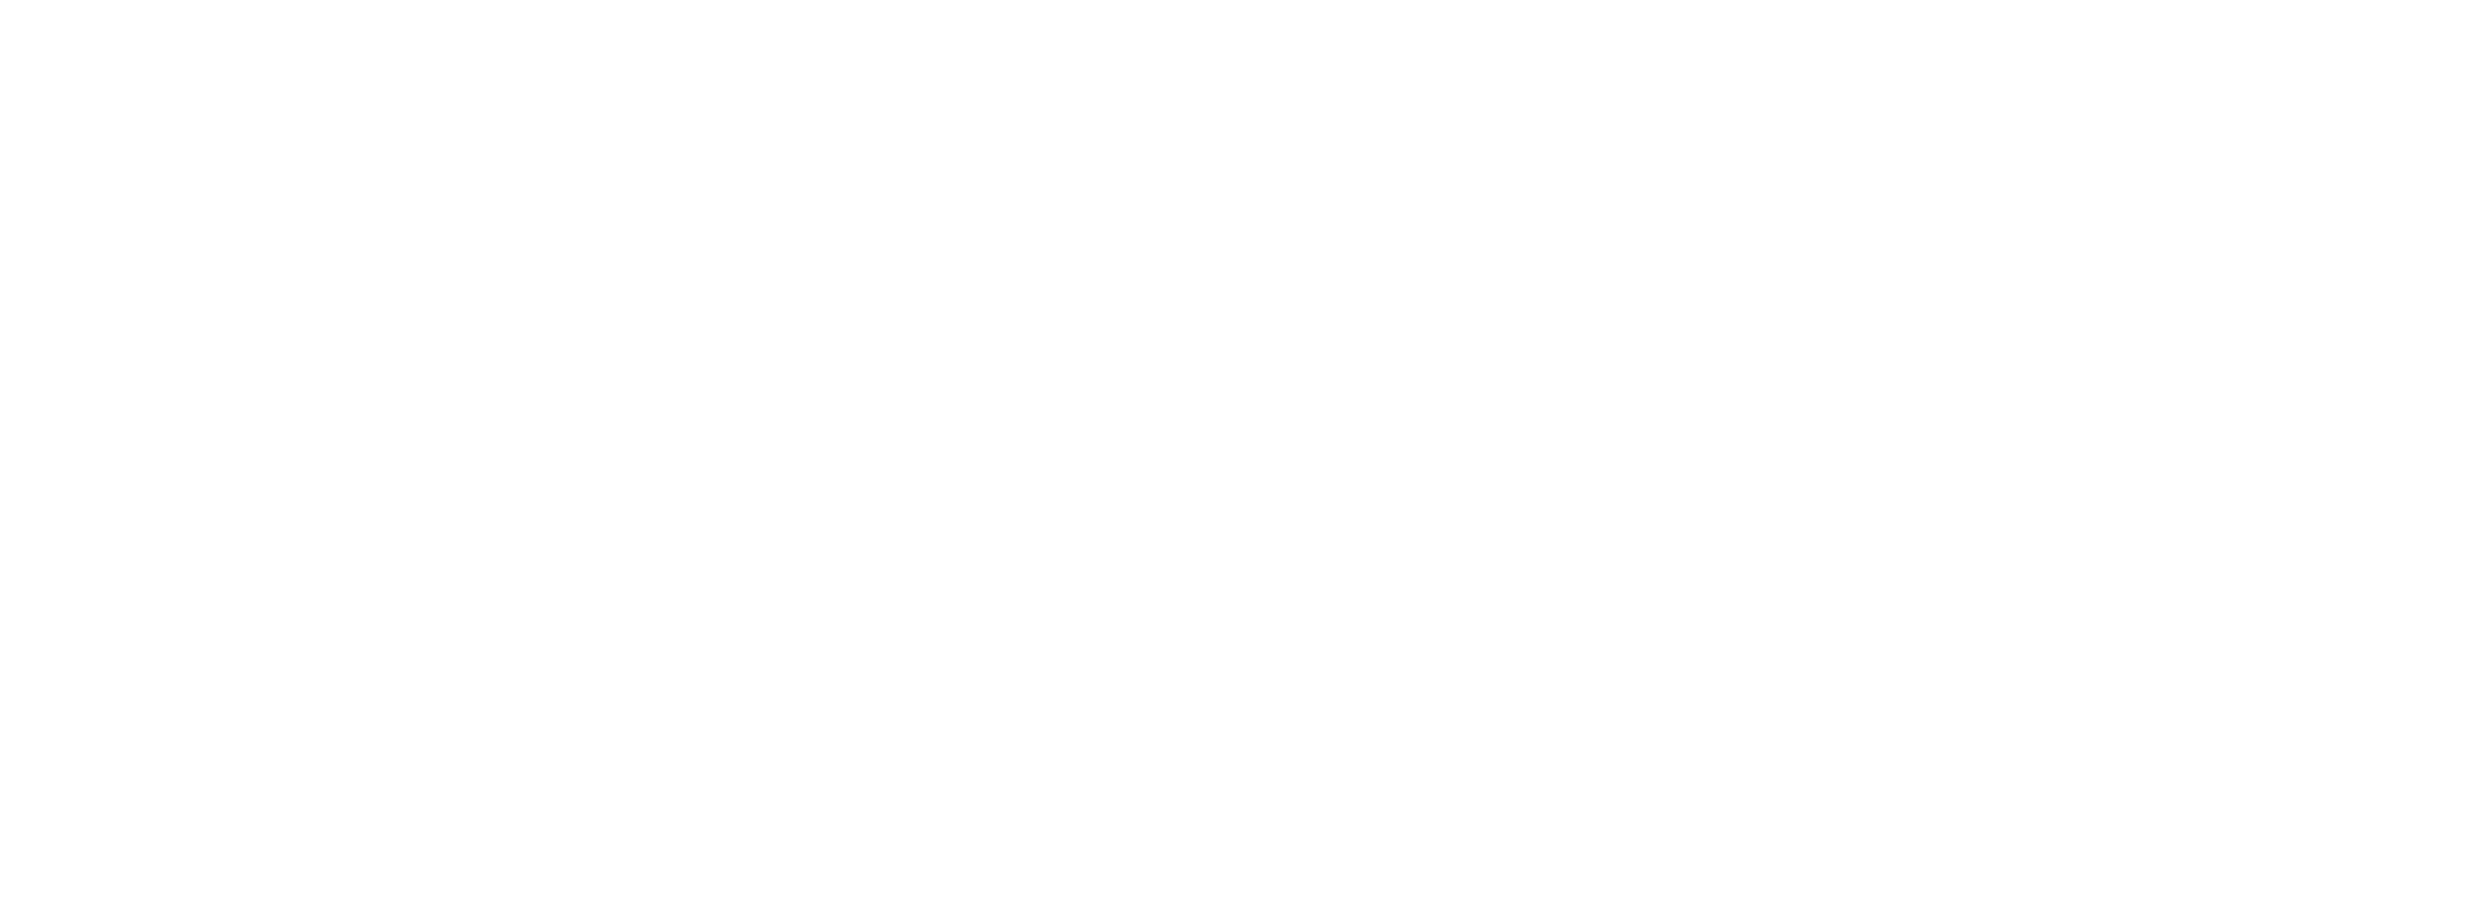 Global Business Logo - B&D Global Business Corporation